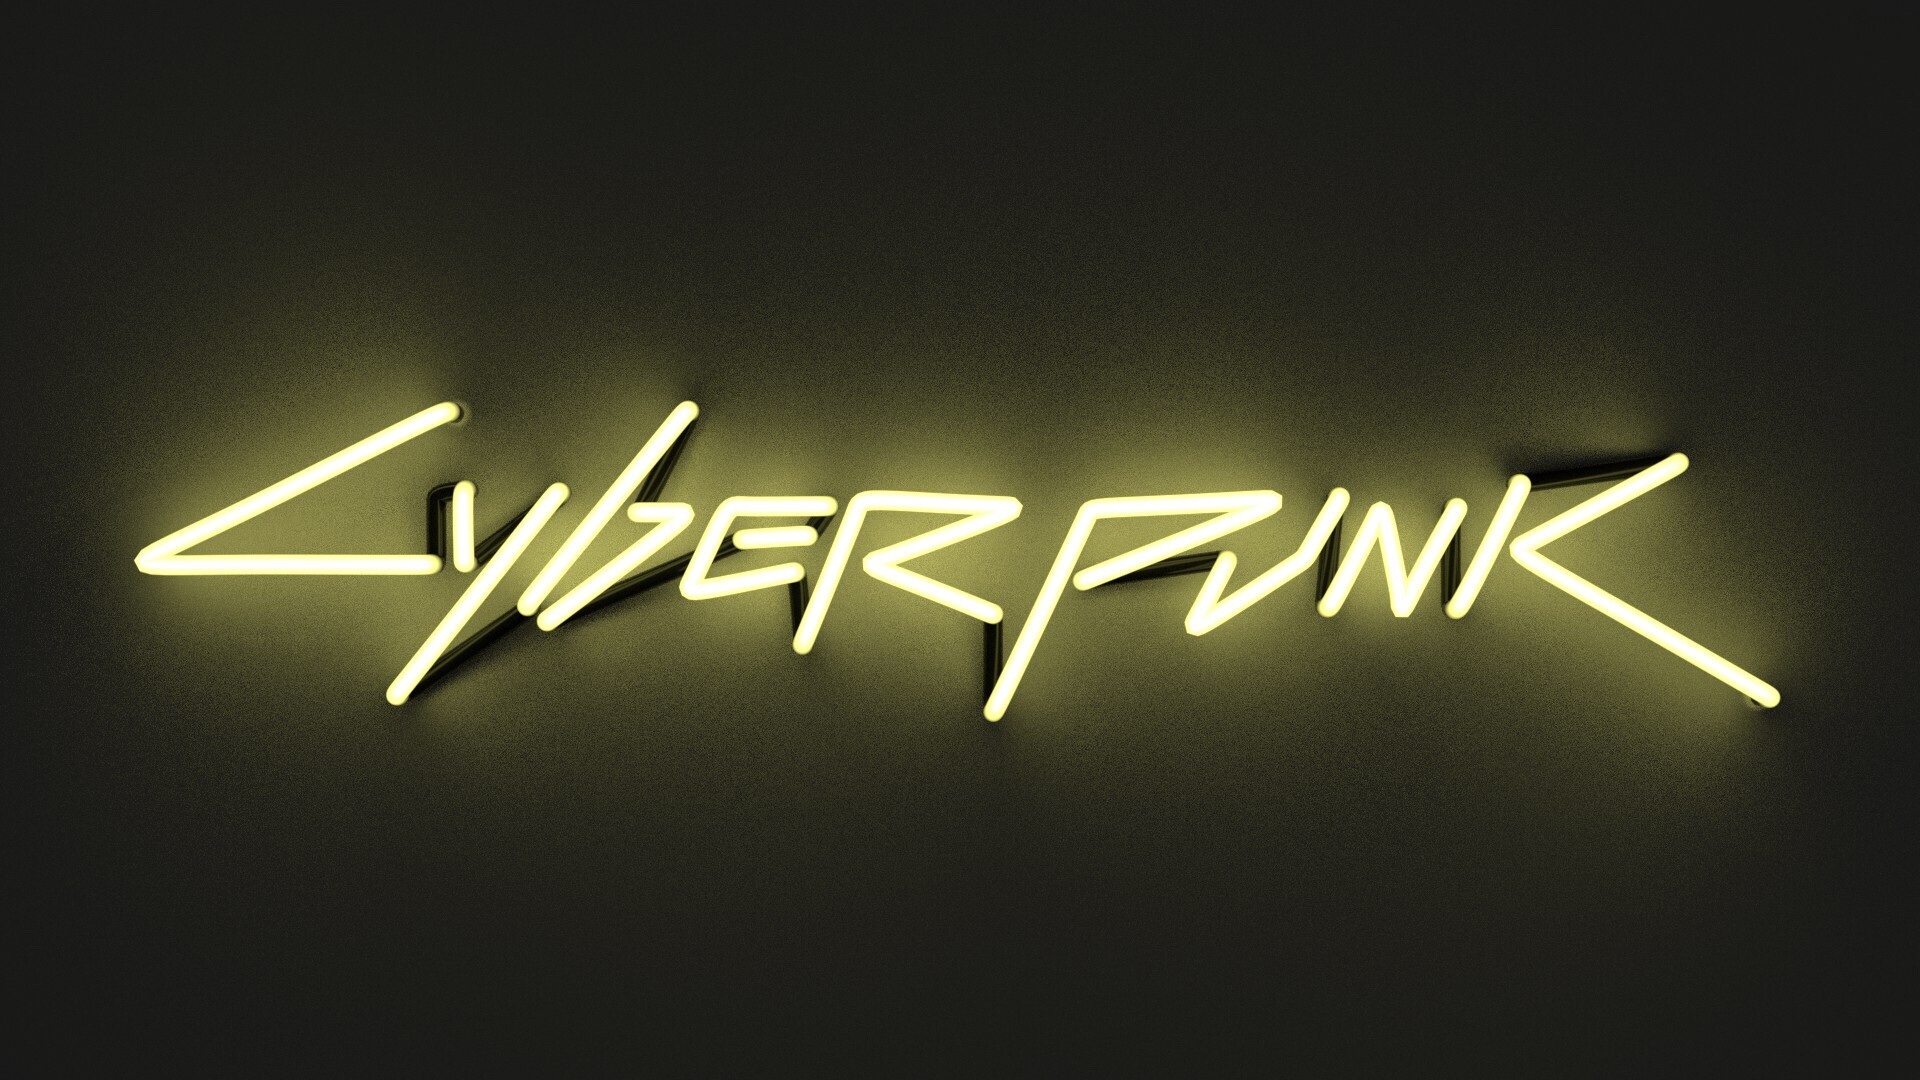 Cyberpunk logo wallpaper фото 112